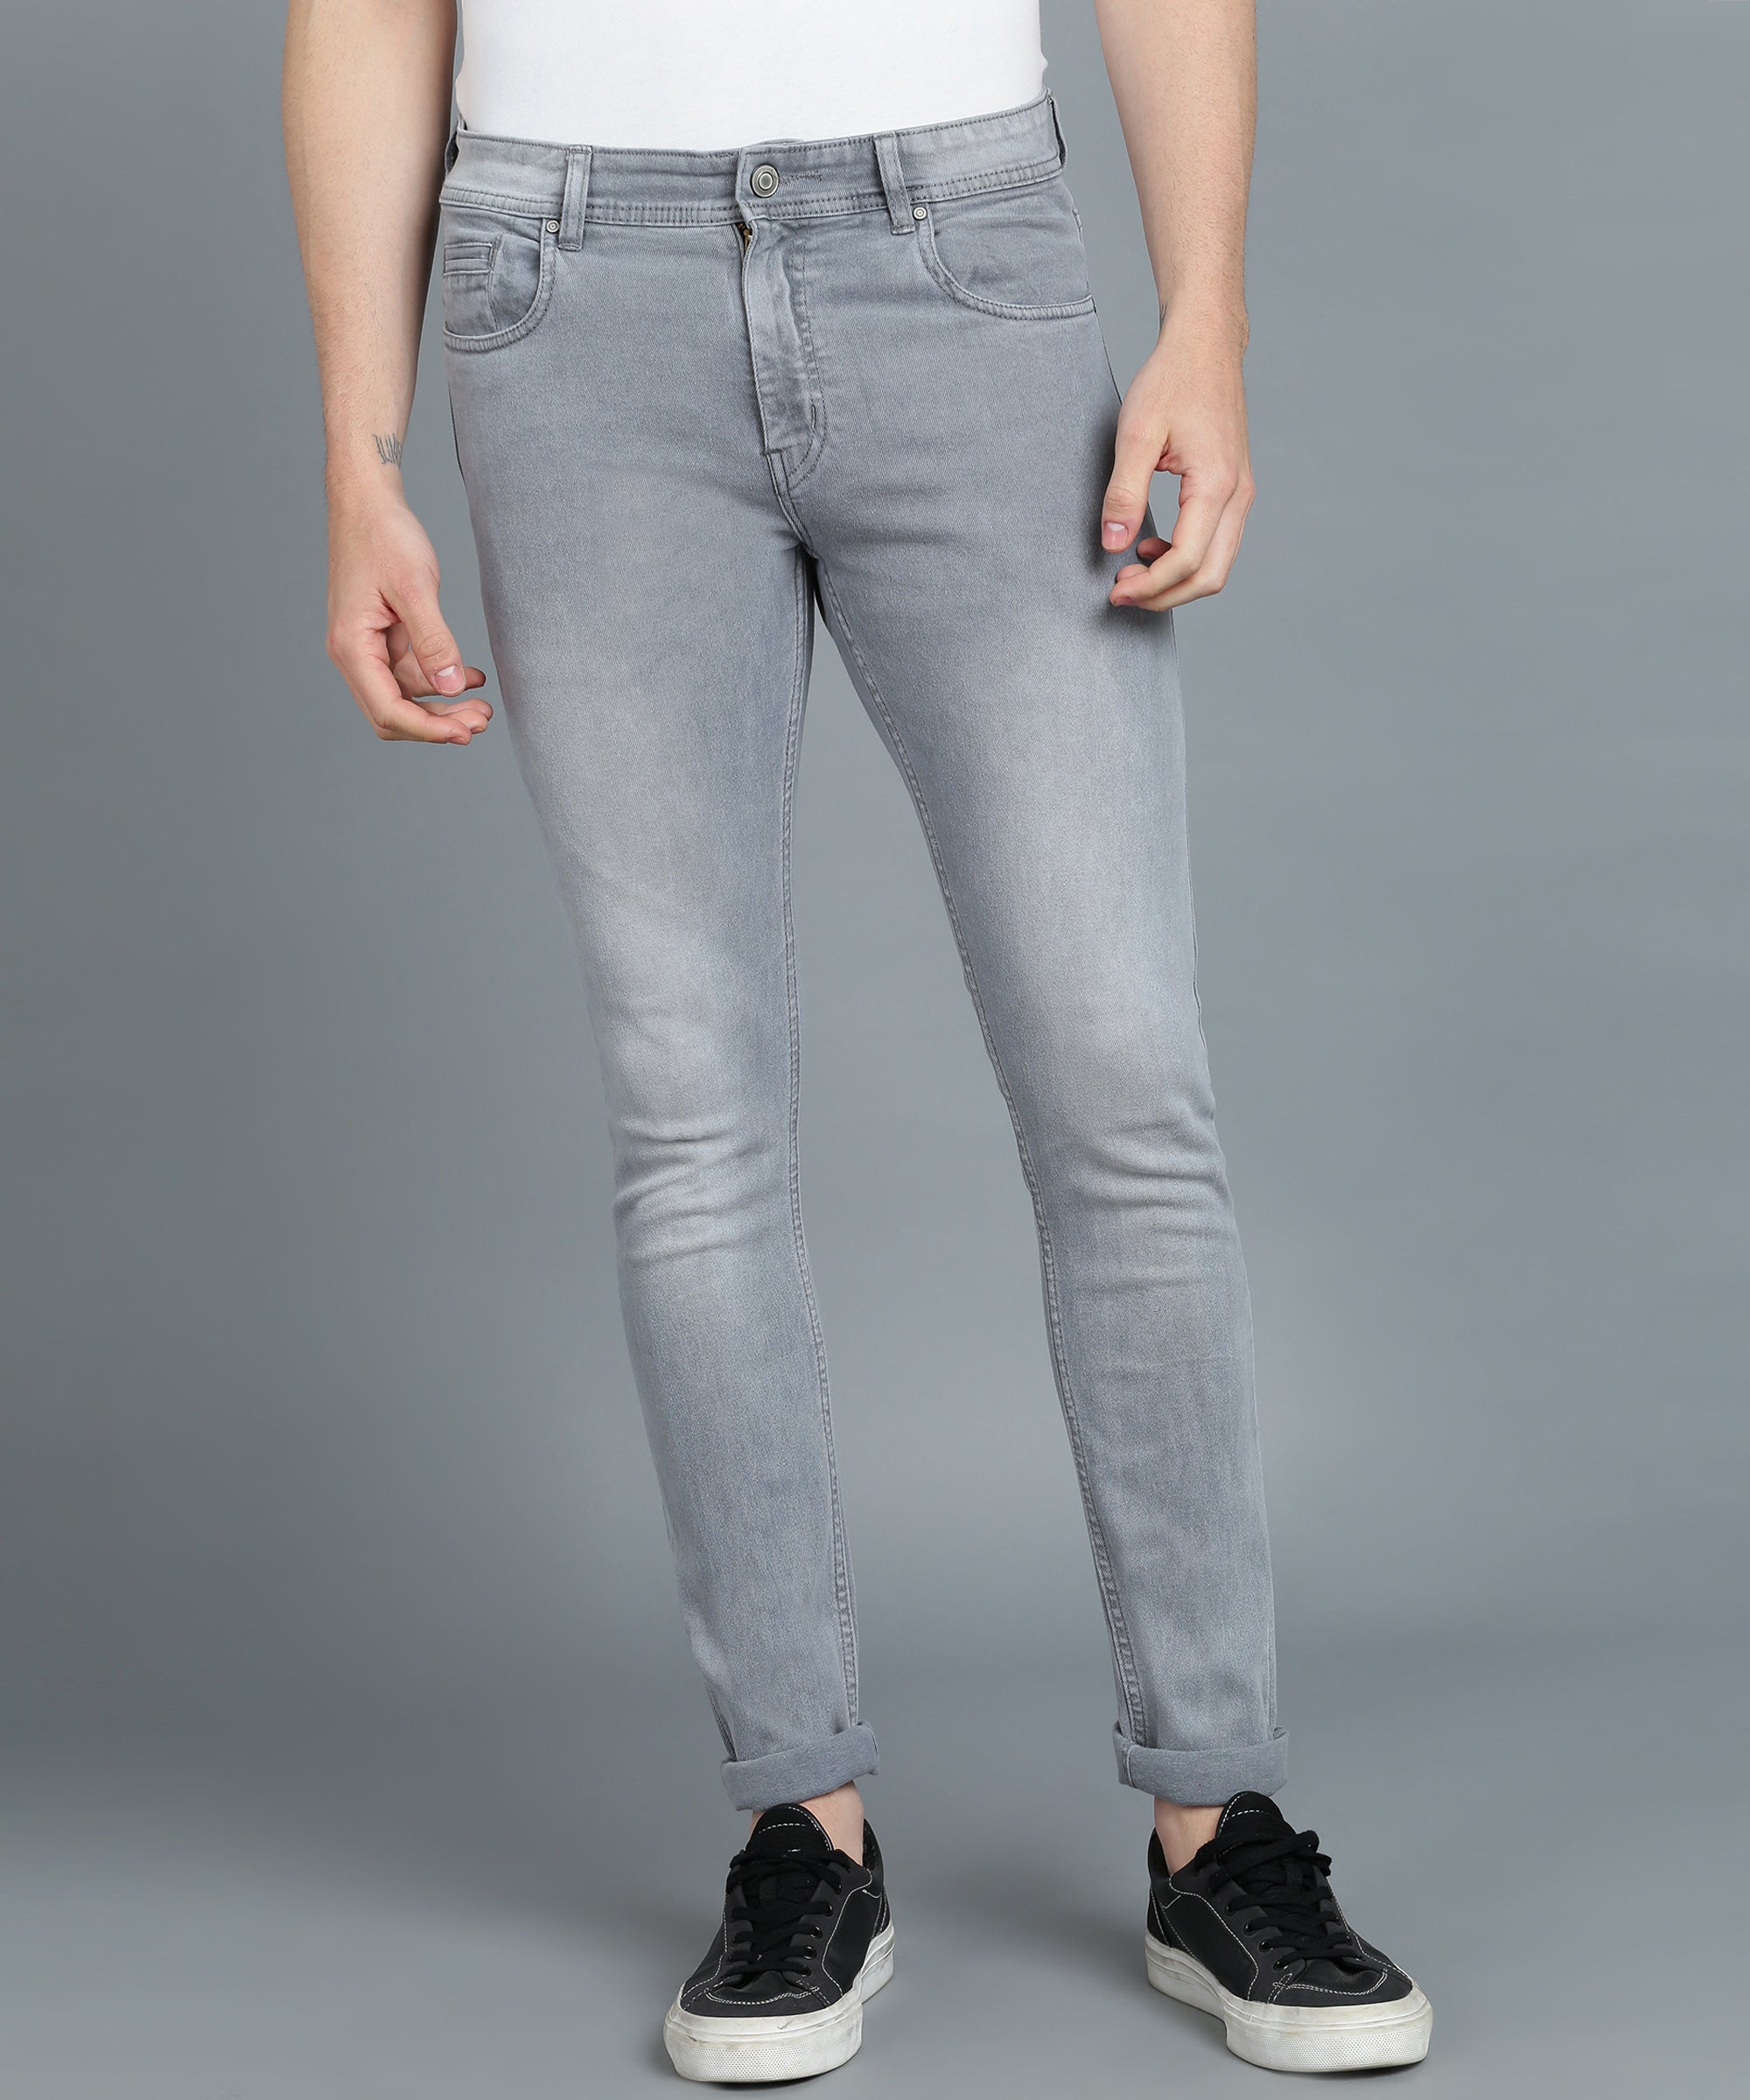 Men's Light Grey Skinny Fit Washed Jeans Stretchable